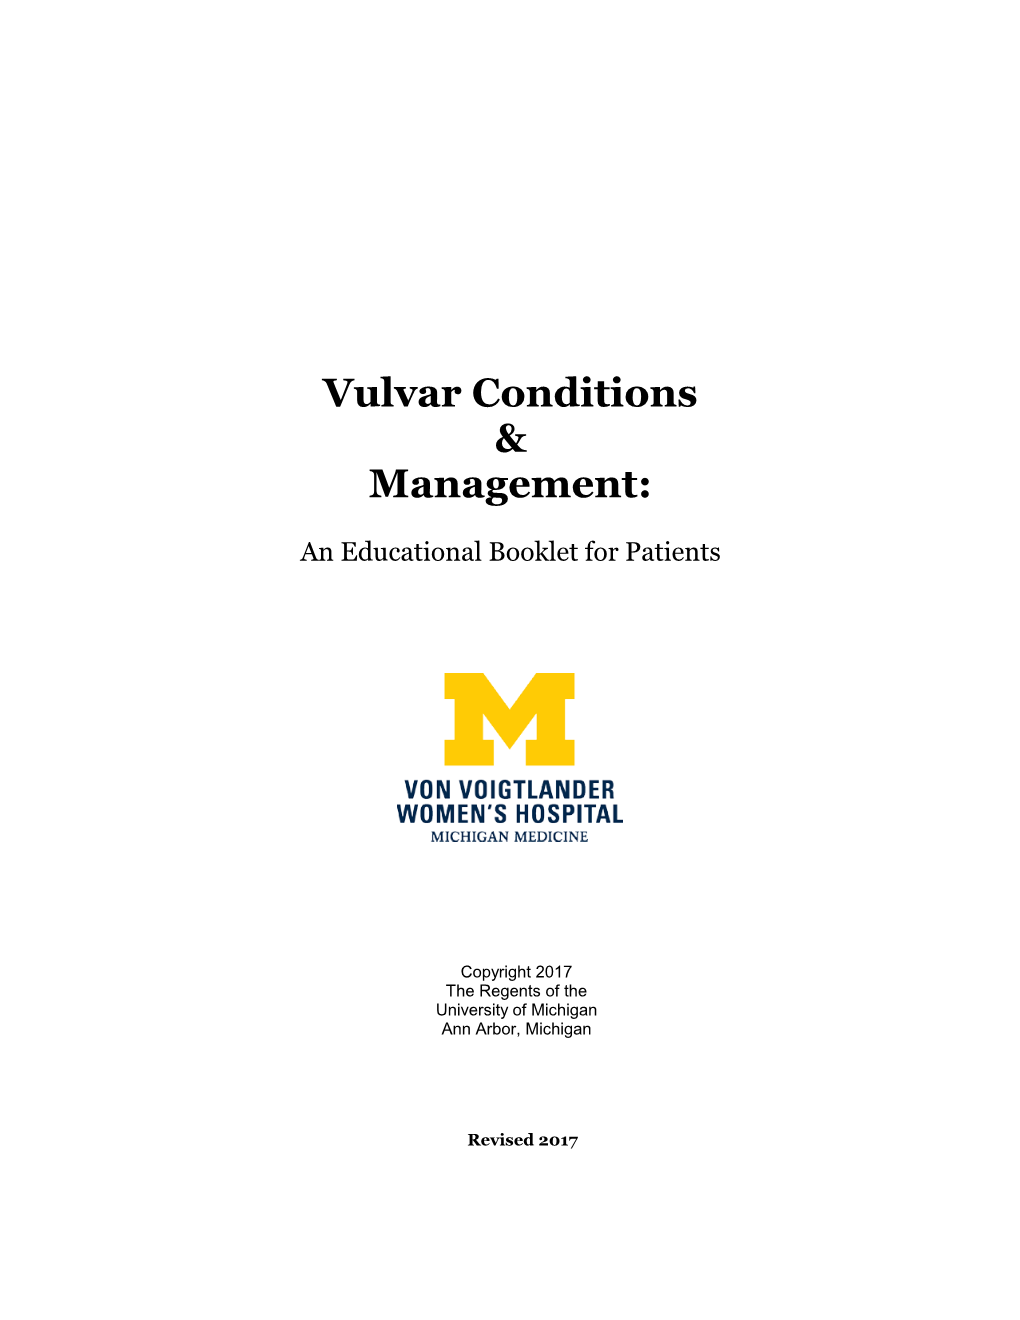 Vulvar Conditions & Management